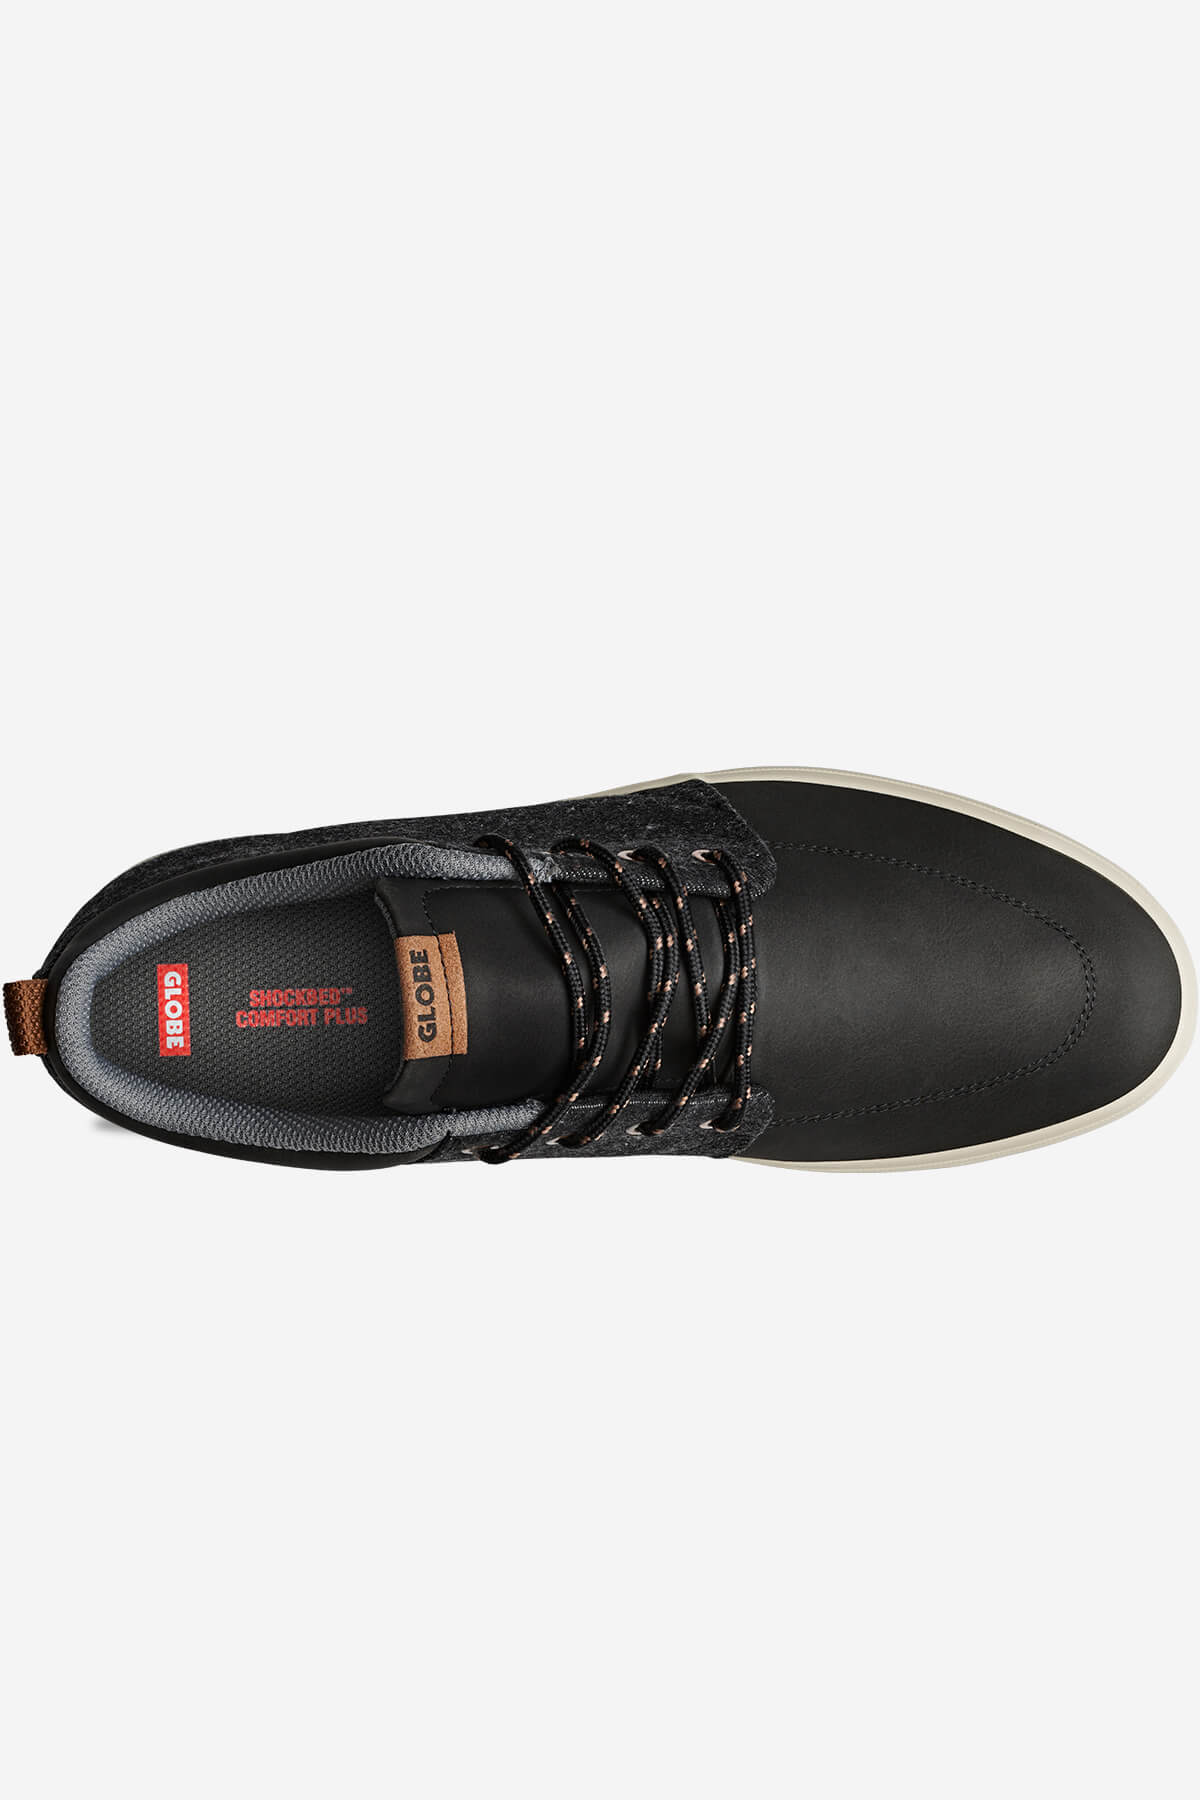 Globe Mid shoes GS Chukka - Black/Denim in Black/Denim